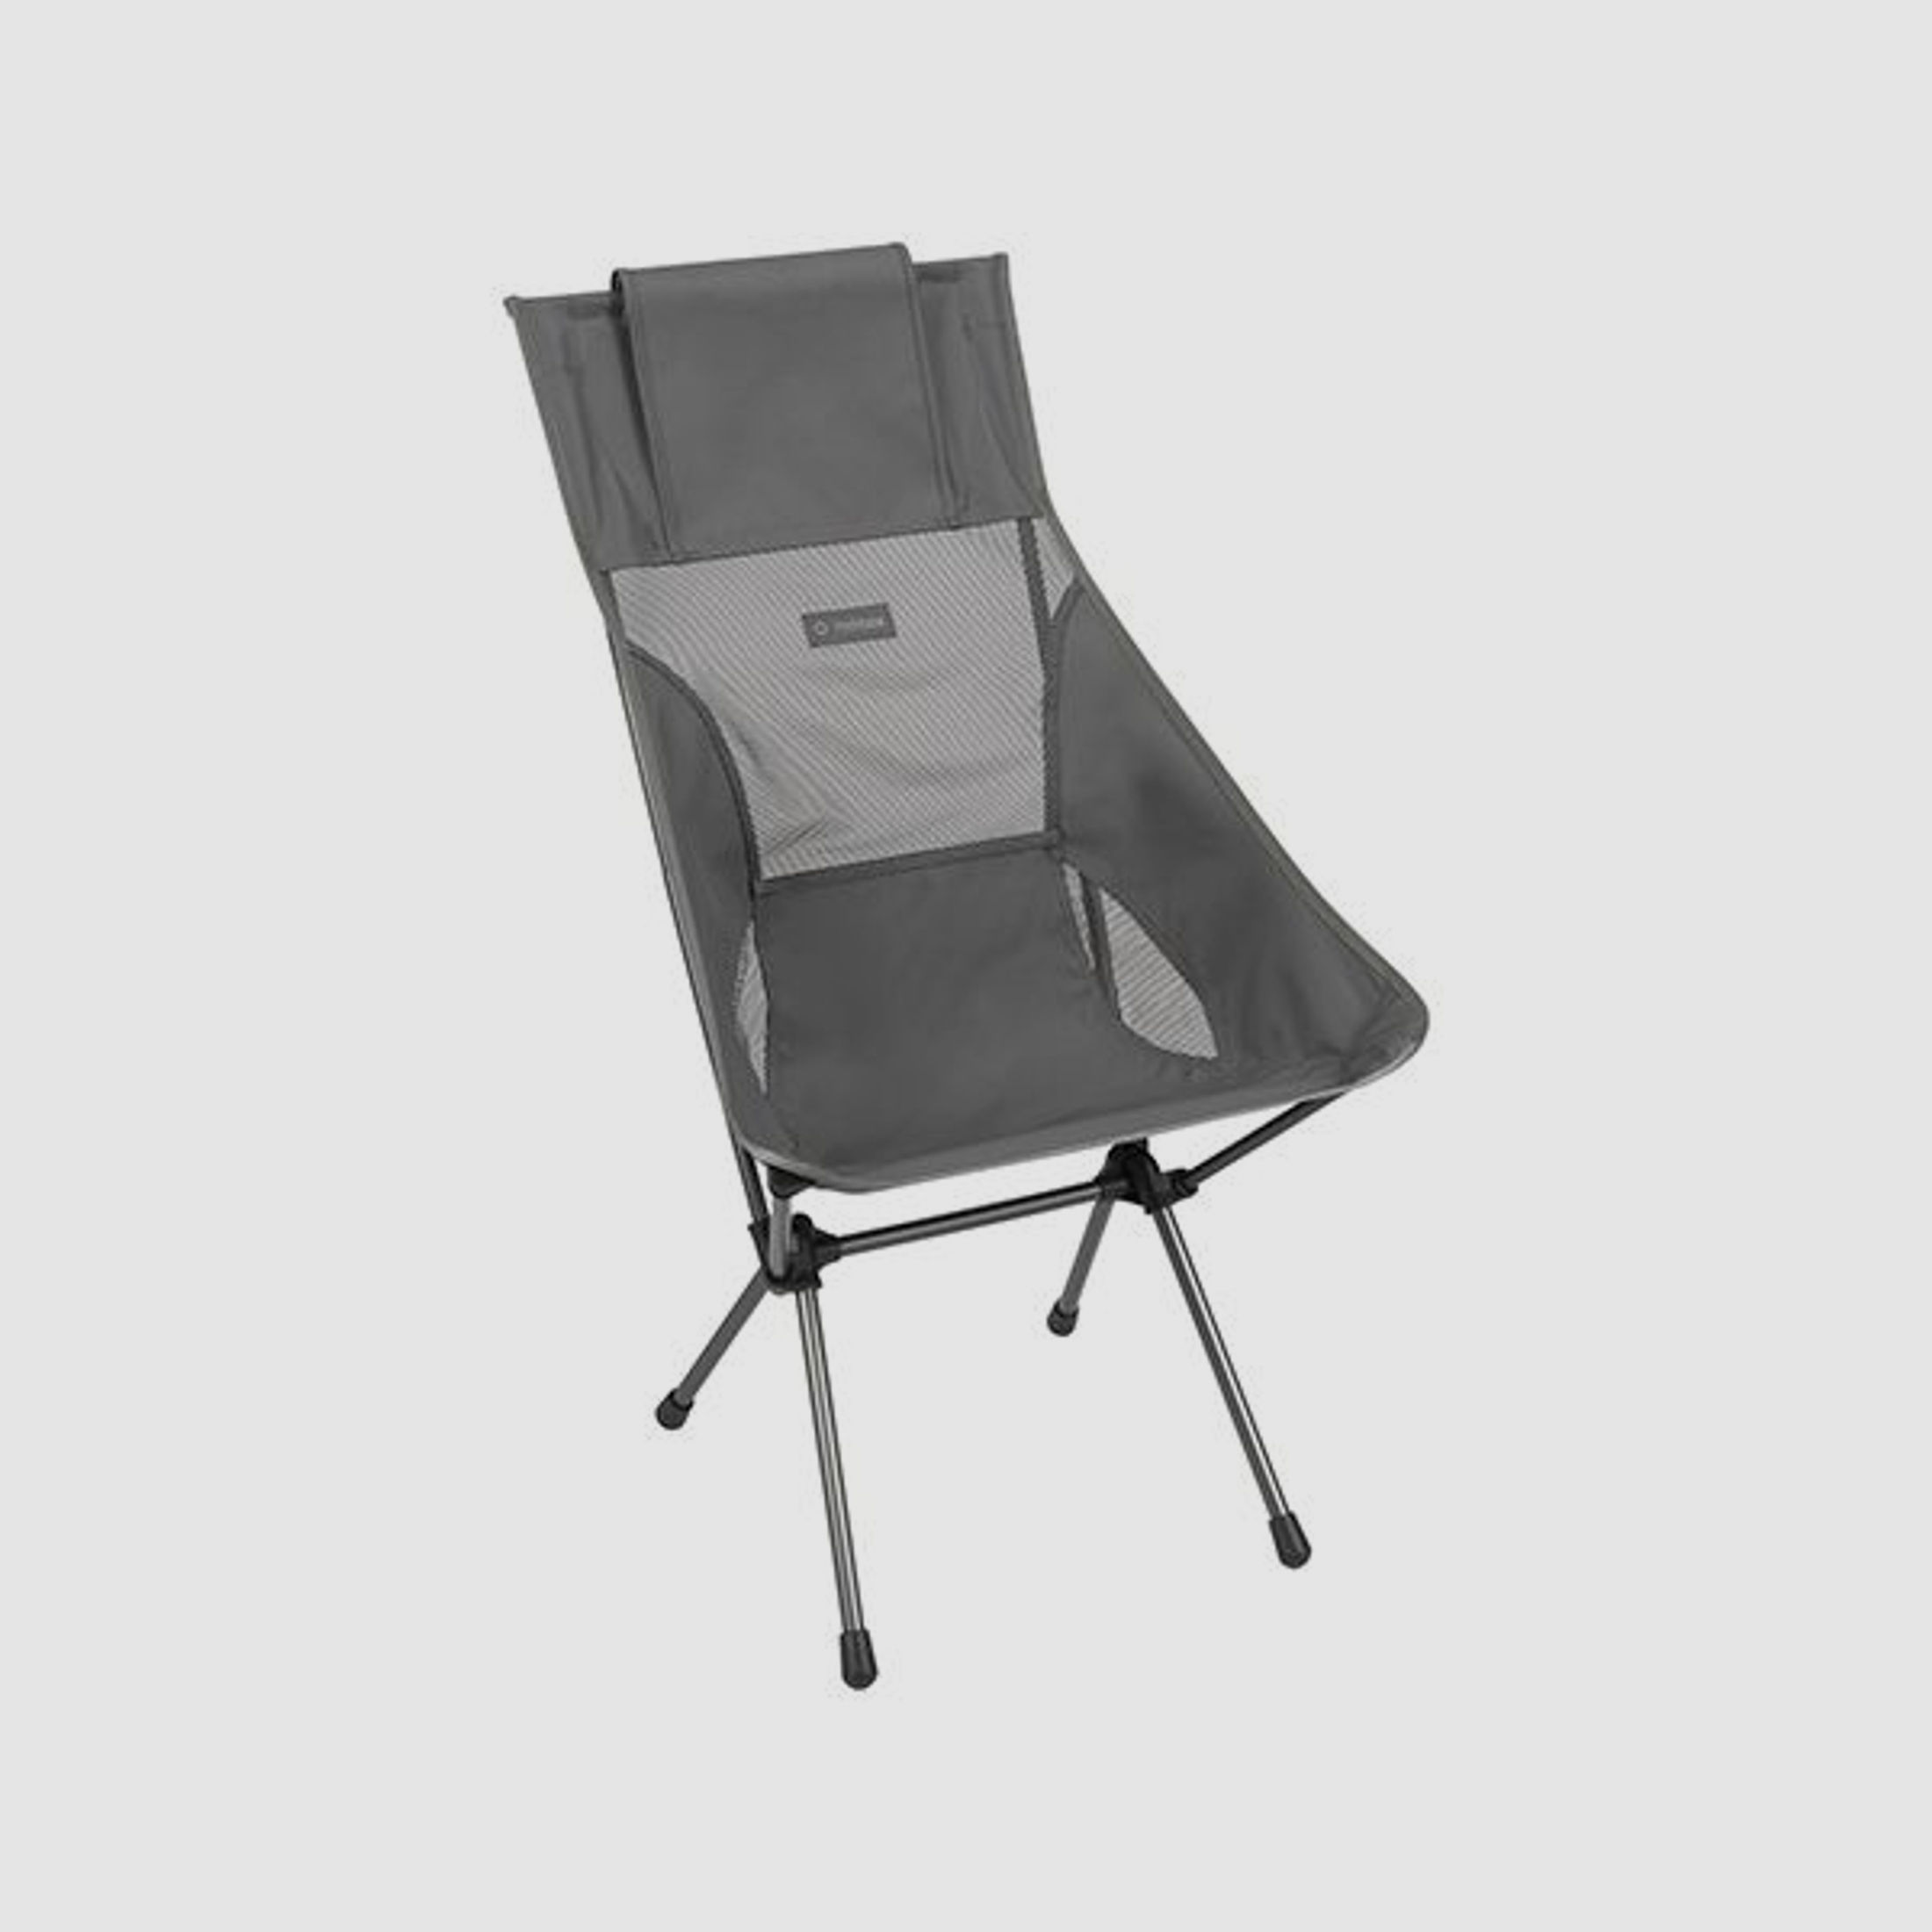 Helinox Helinox Campingstuhl Sunset Chair charcoal